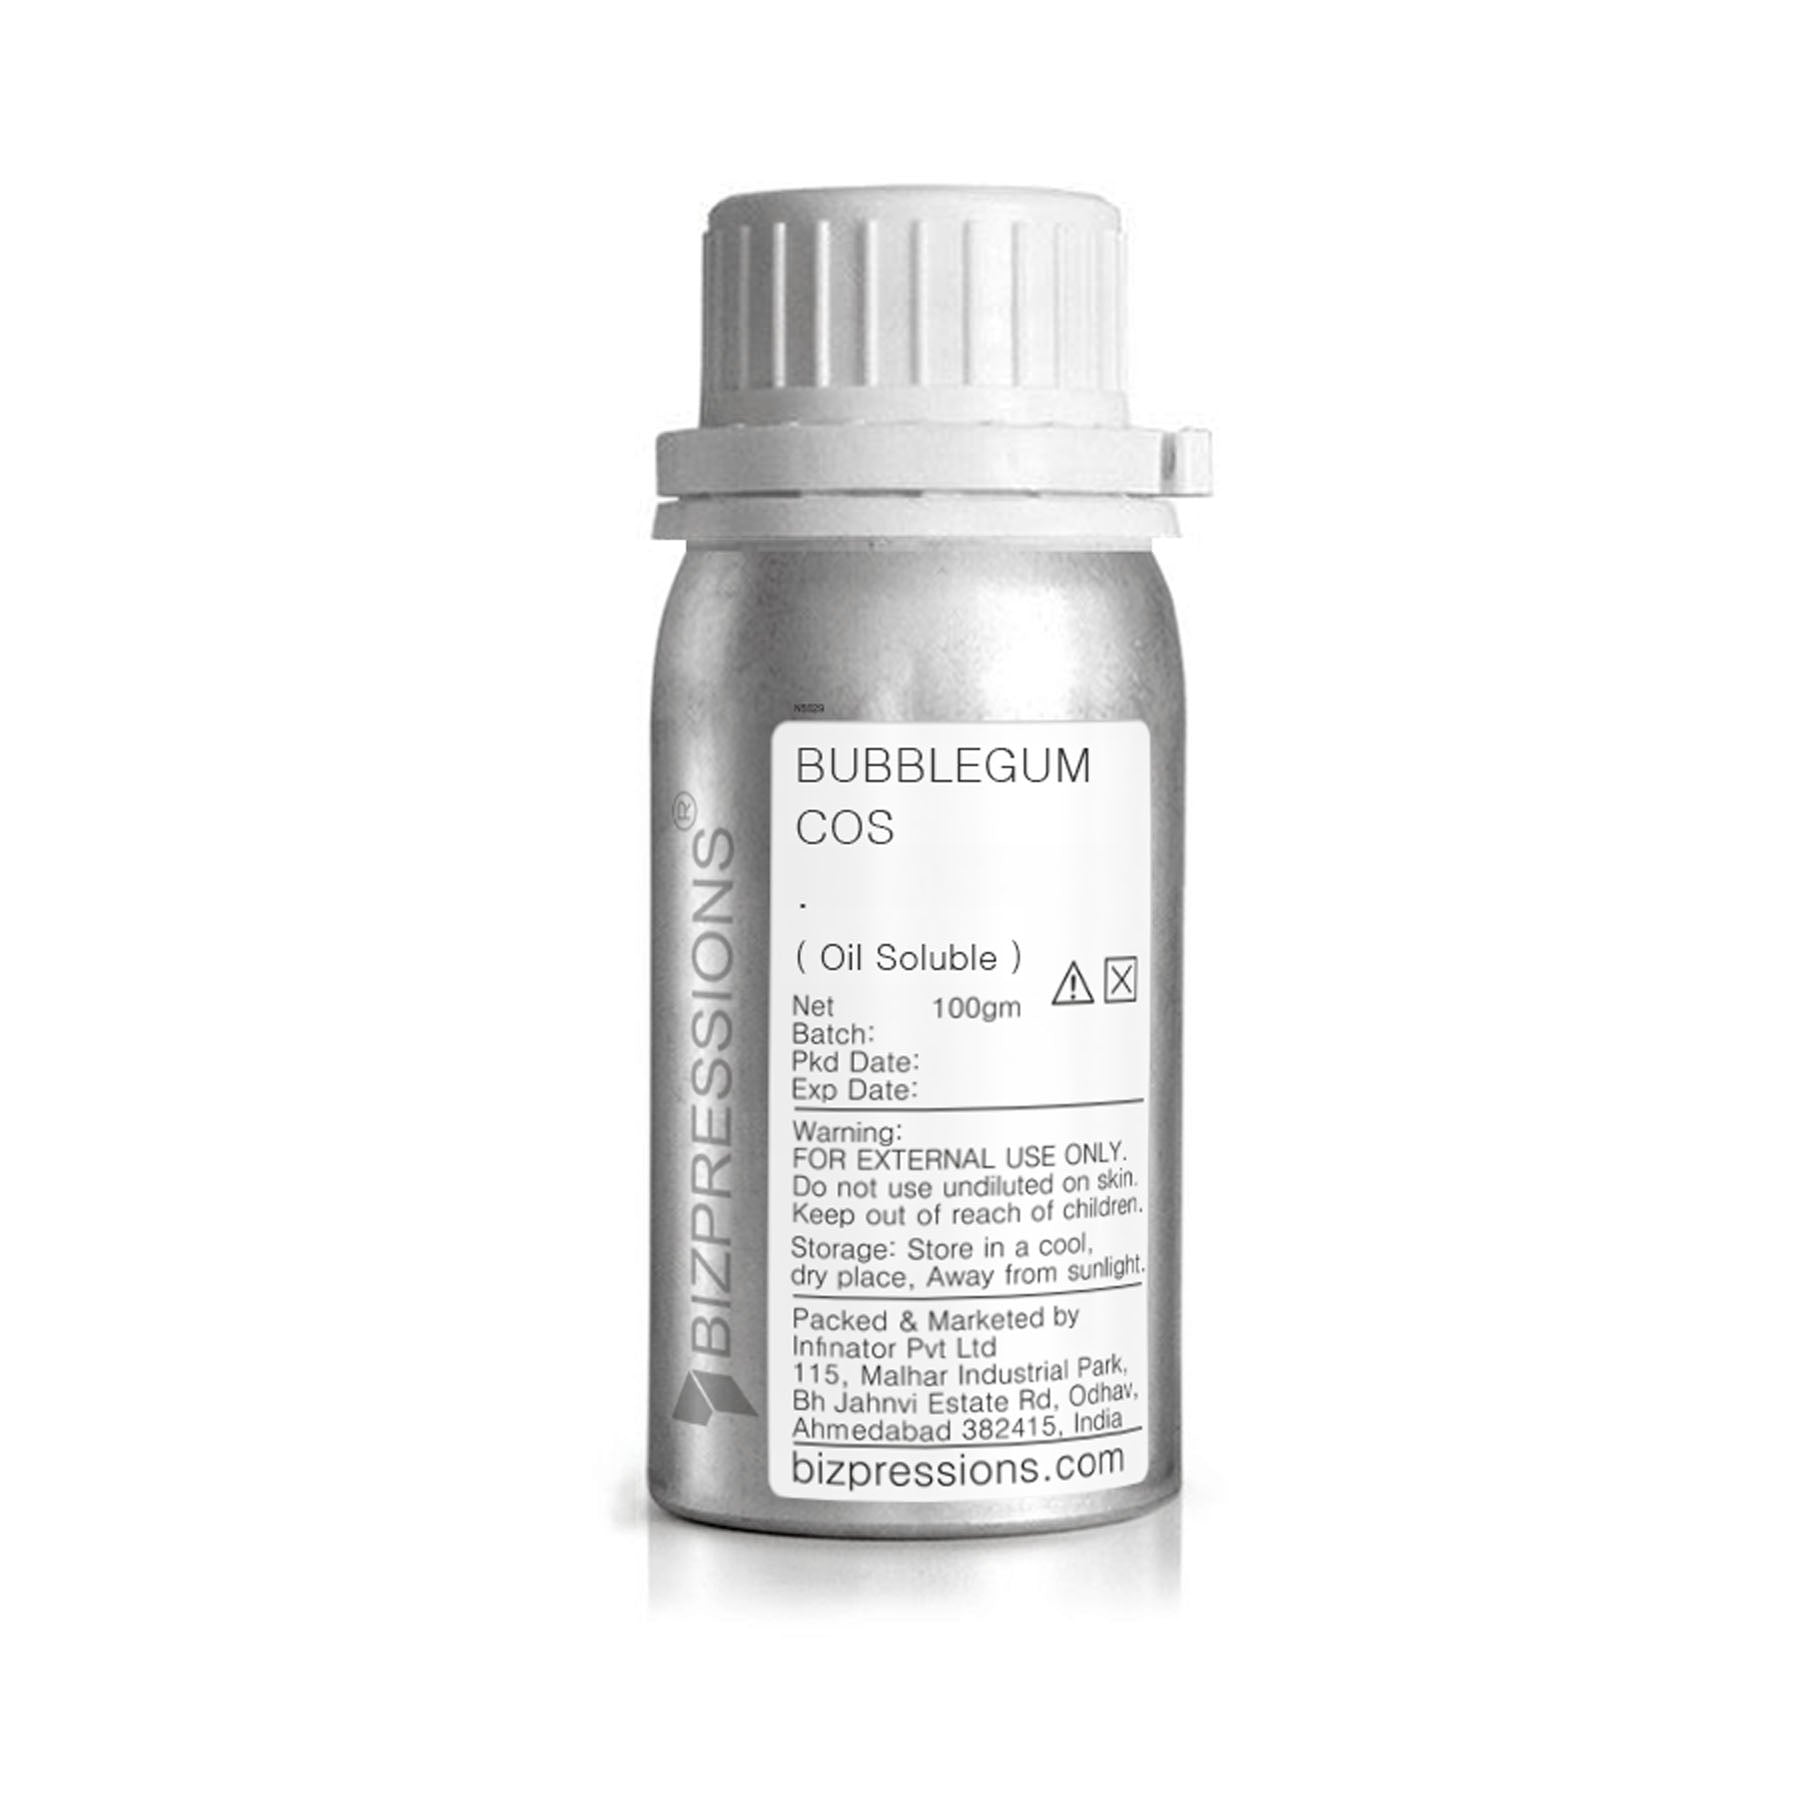 BUBBLEGUM COS - Fragrance ( Oil Soluble ) - 100 gm